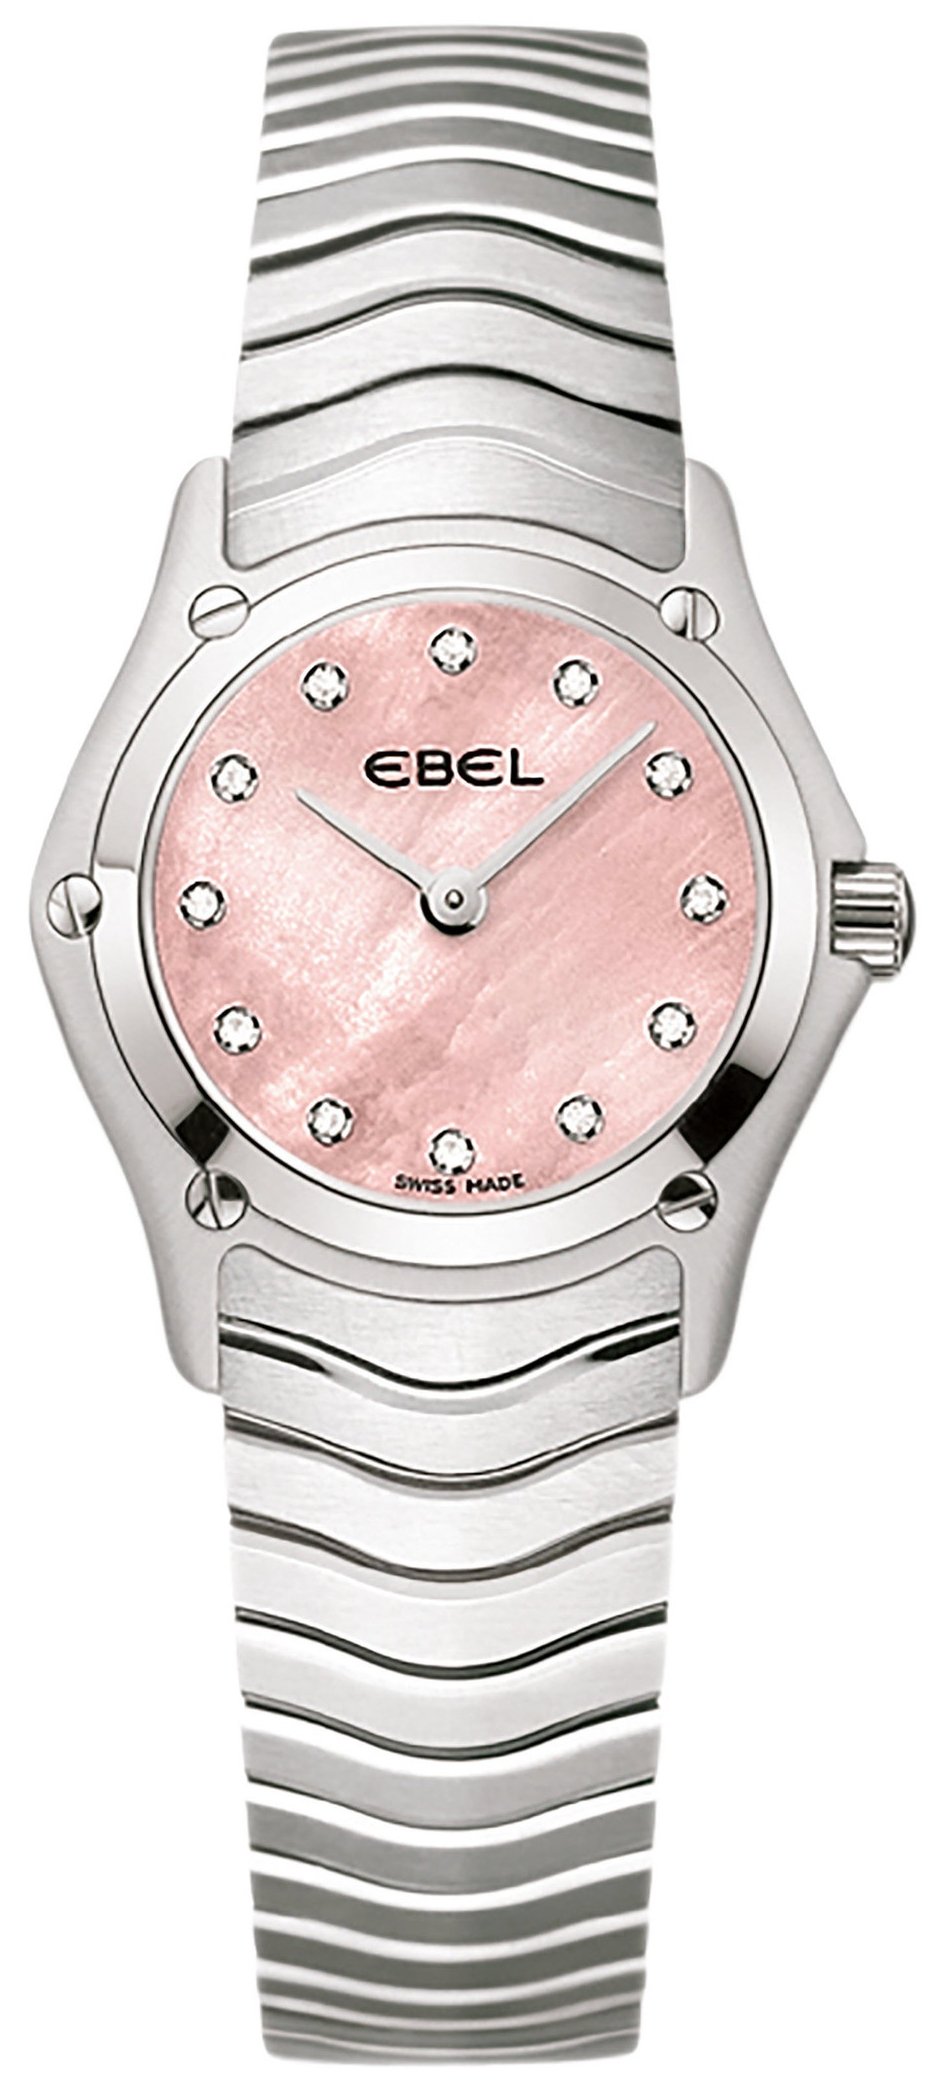 EBEL watches